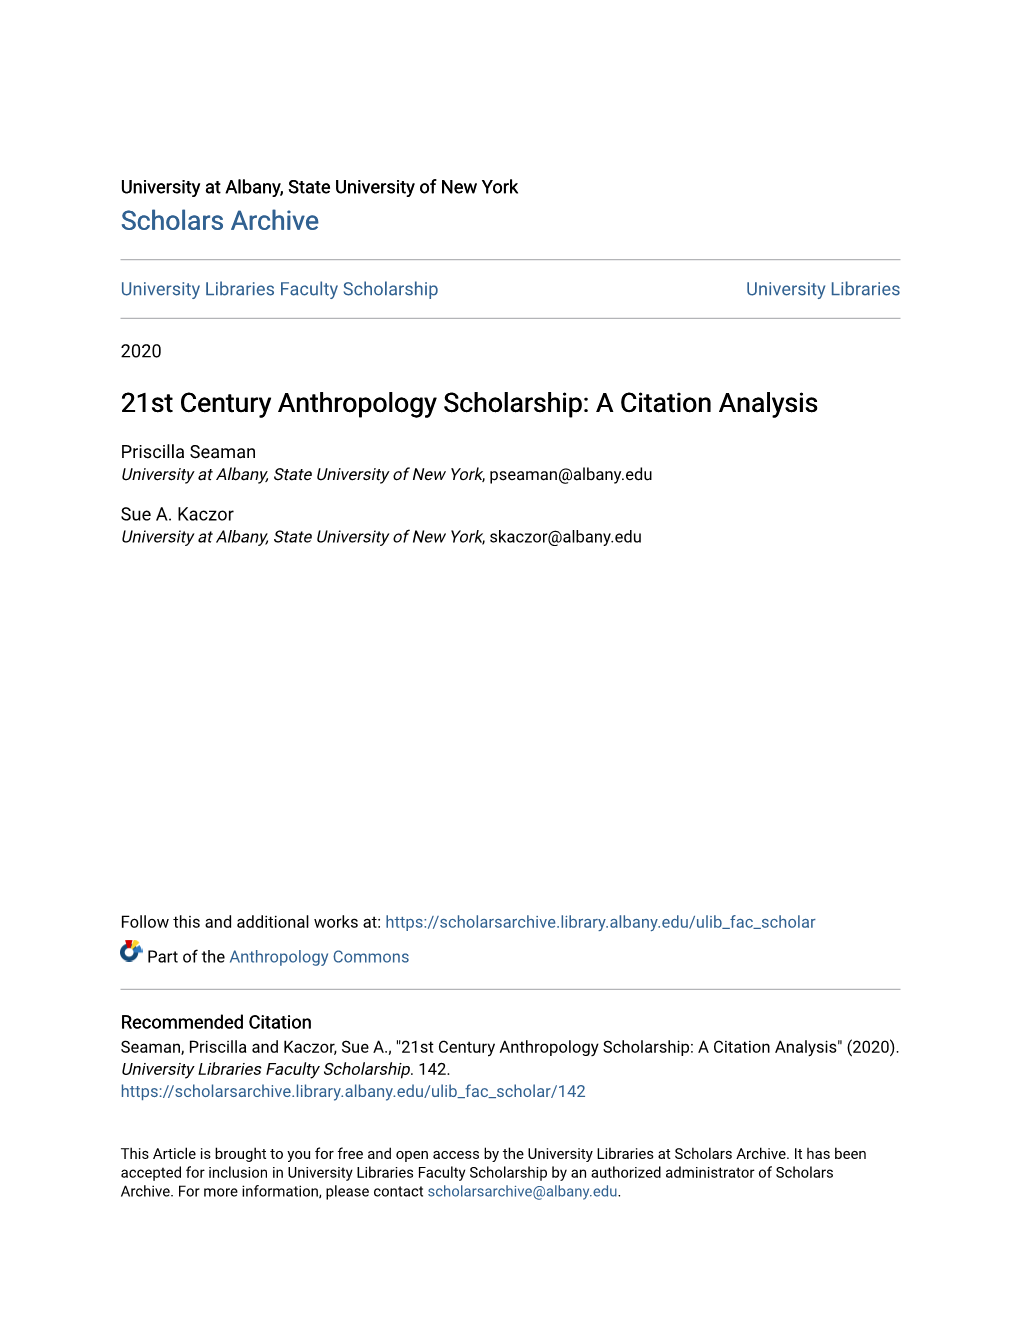 21St Century Anthropology Scholarship: a Citation Analysis